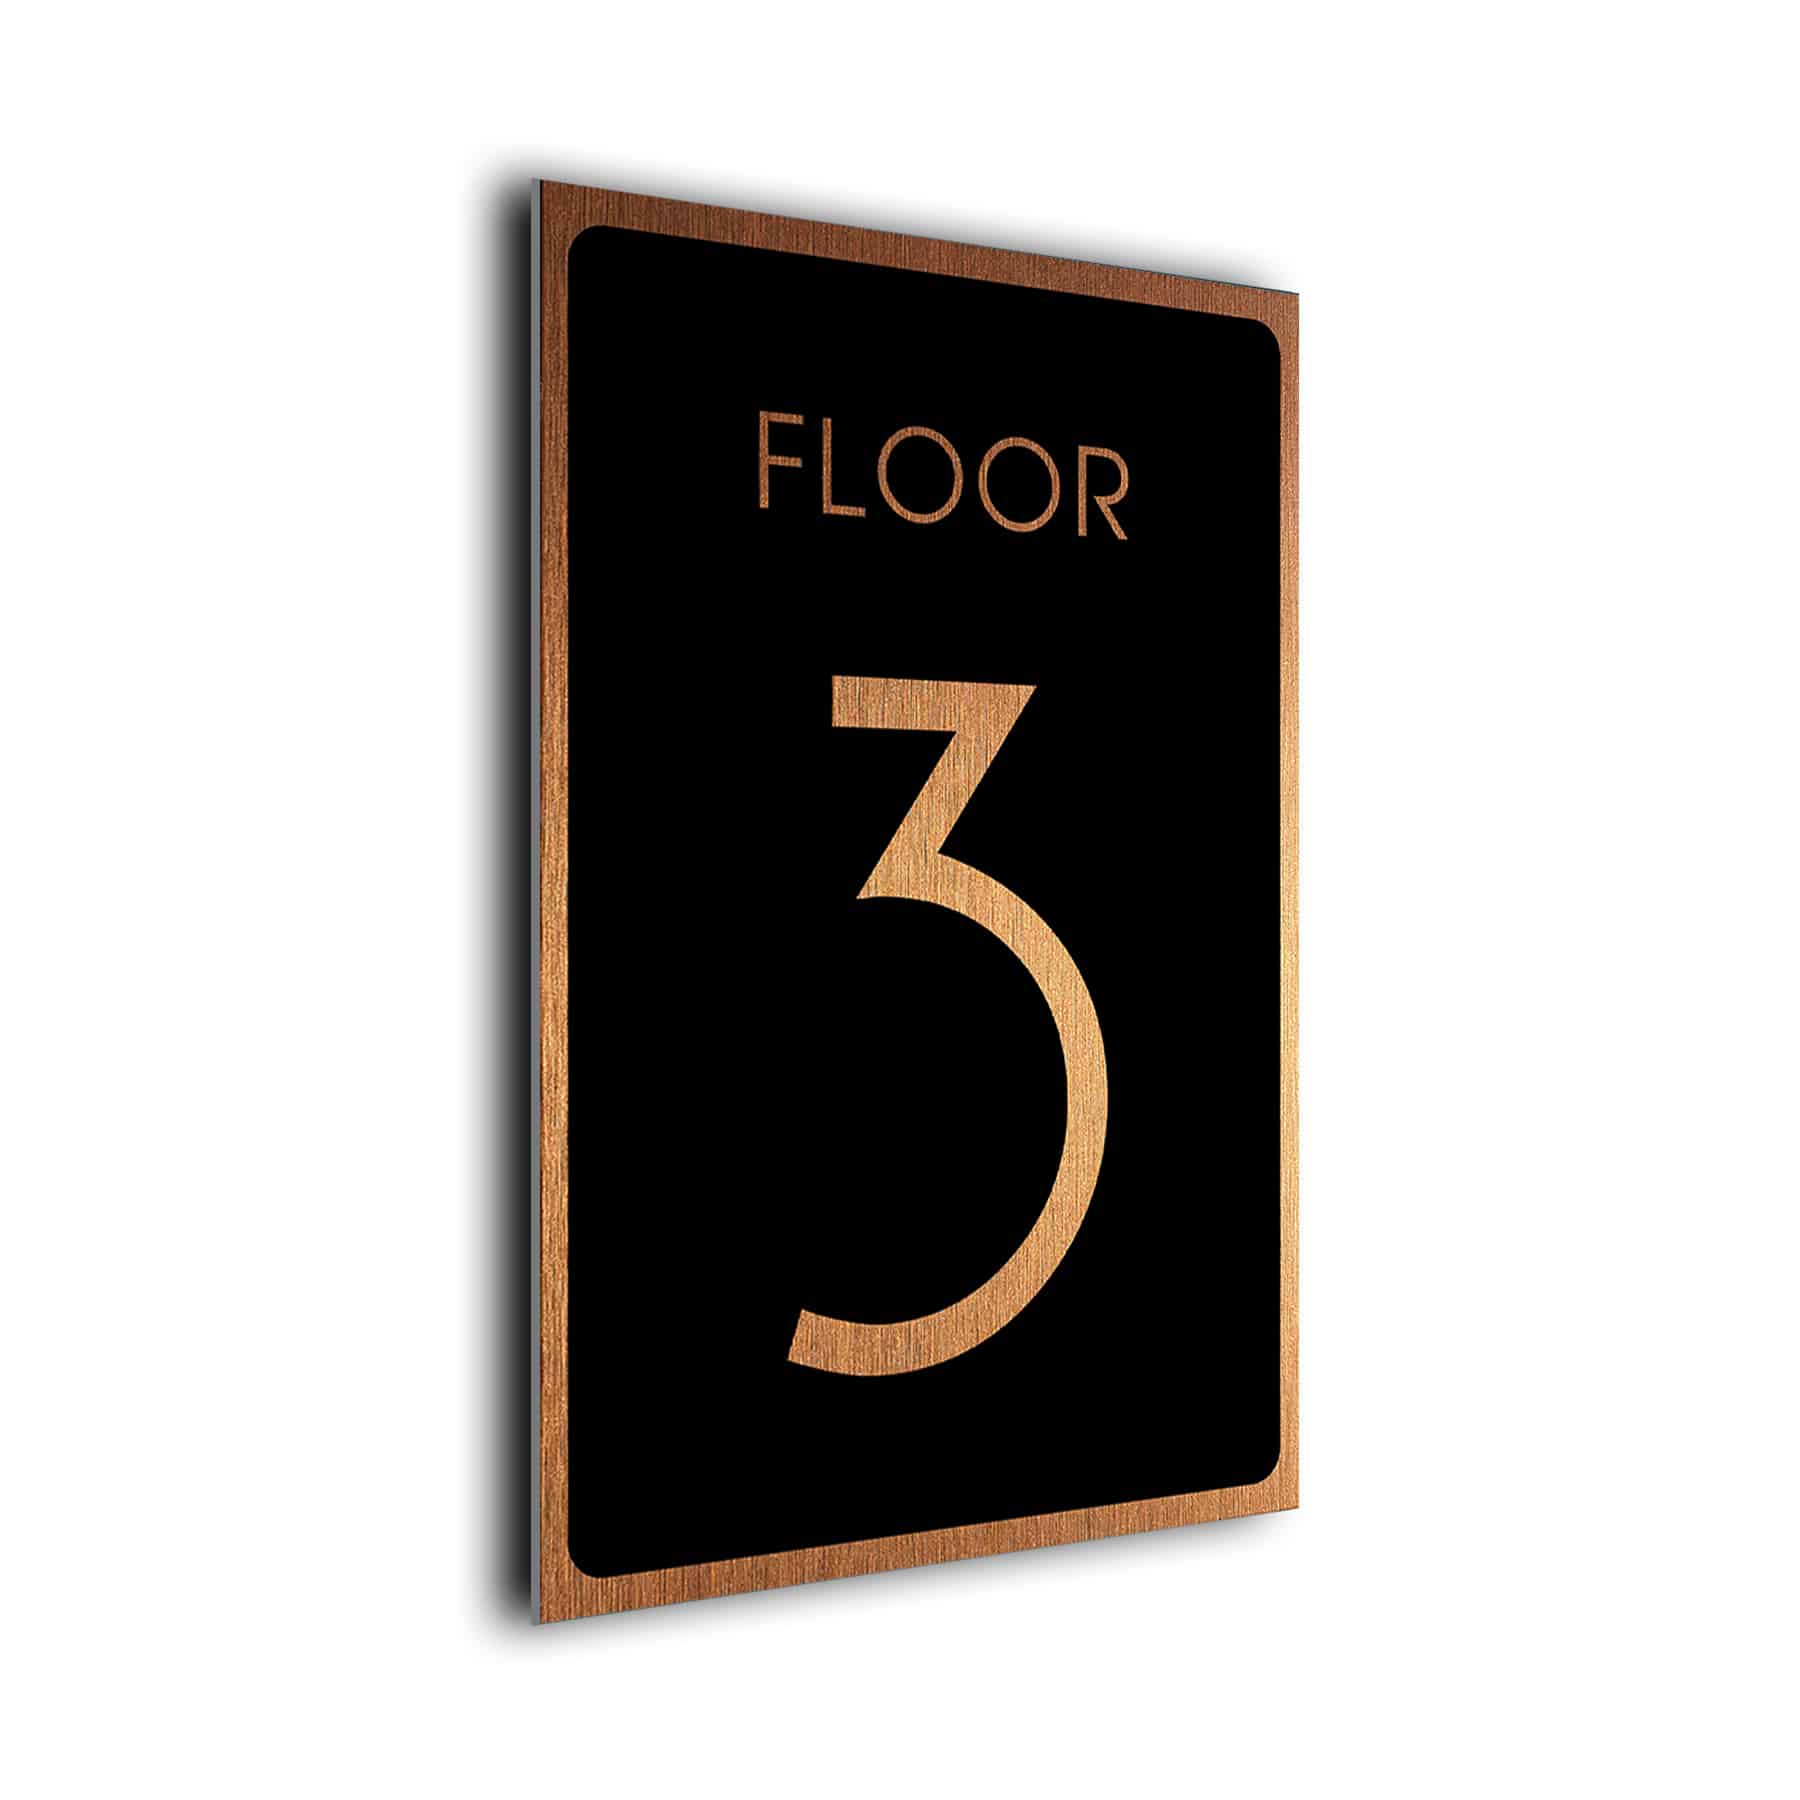 Floor Number signs